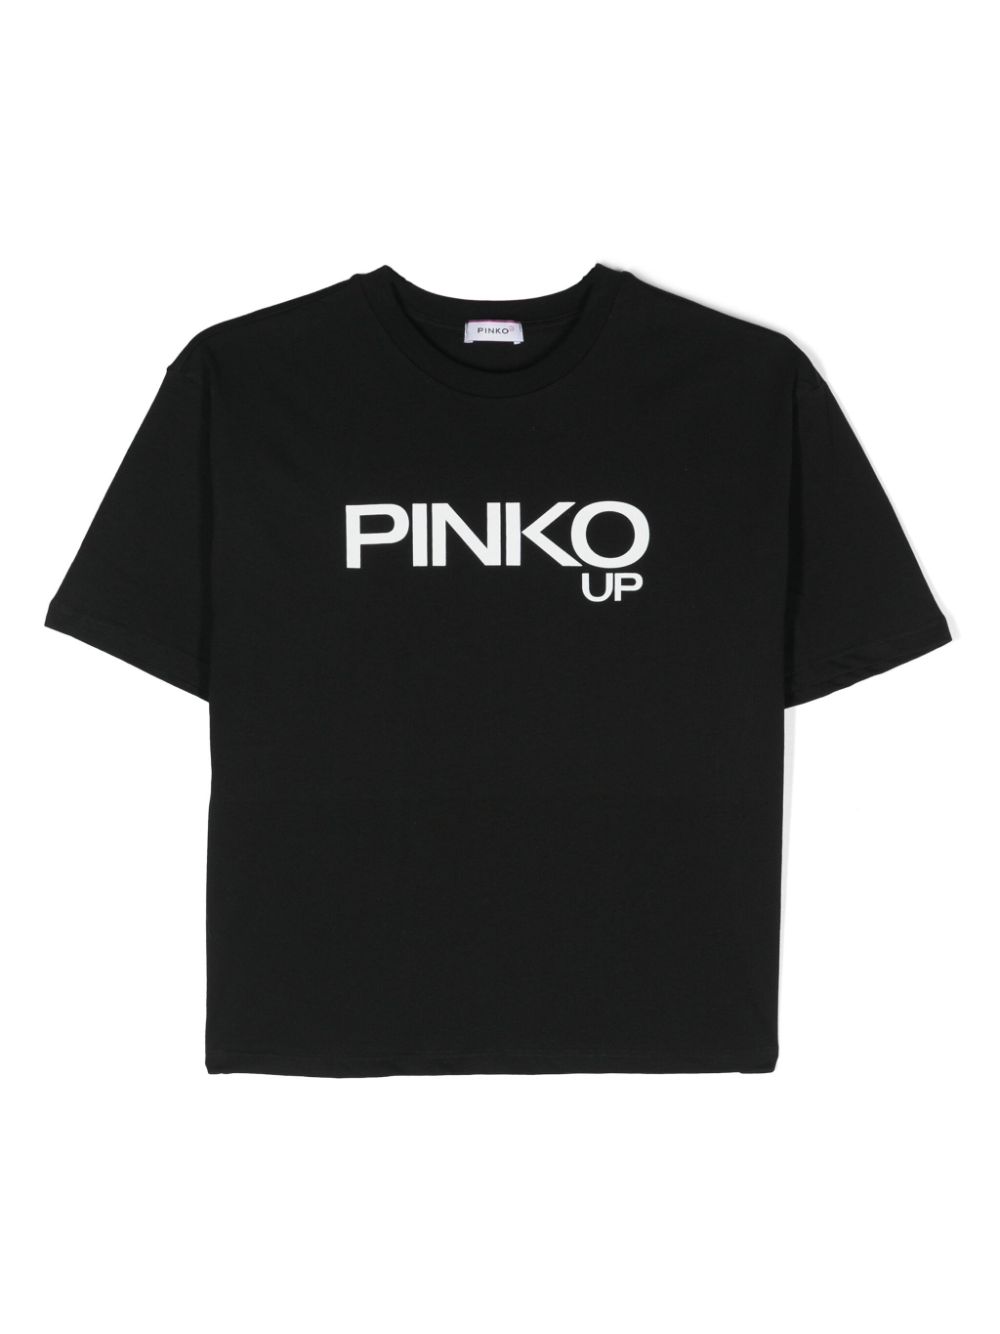 T-shirt nera per bambina con logo bianco